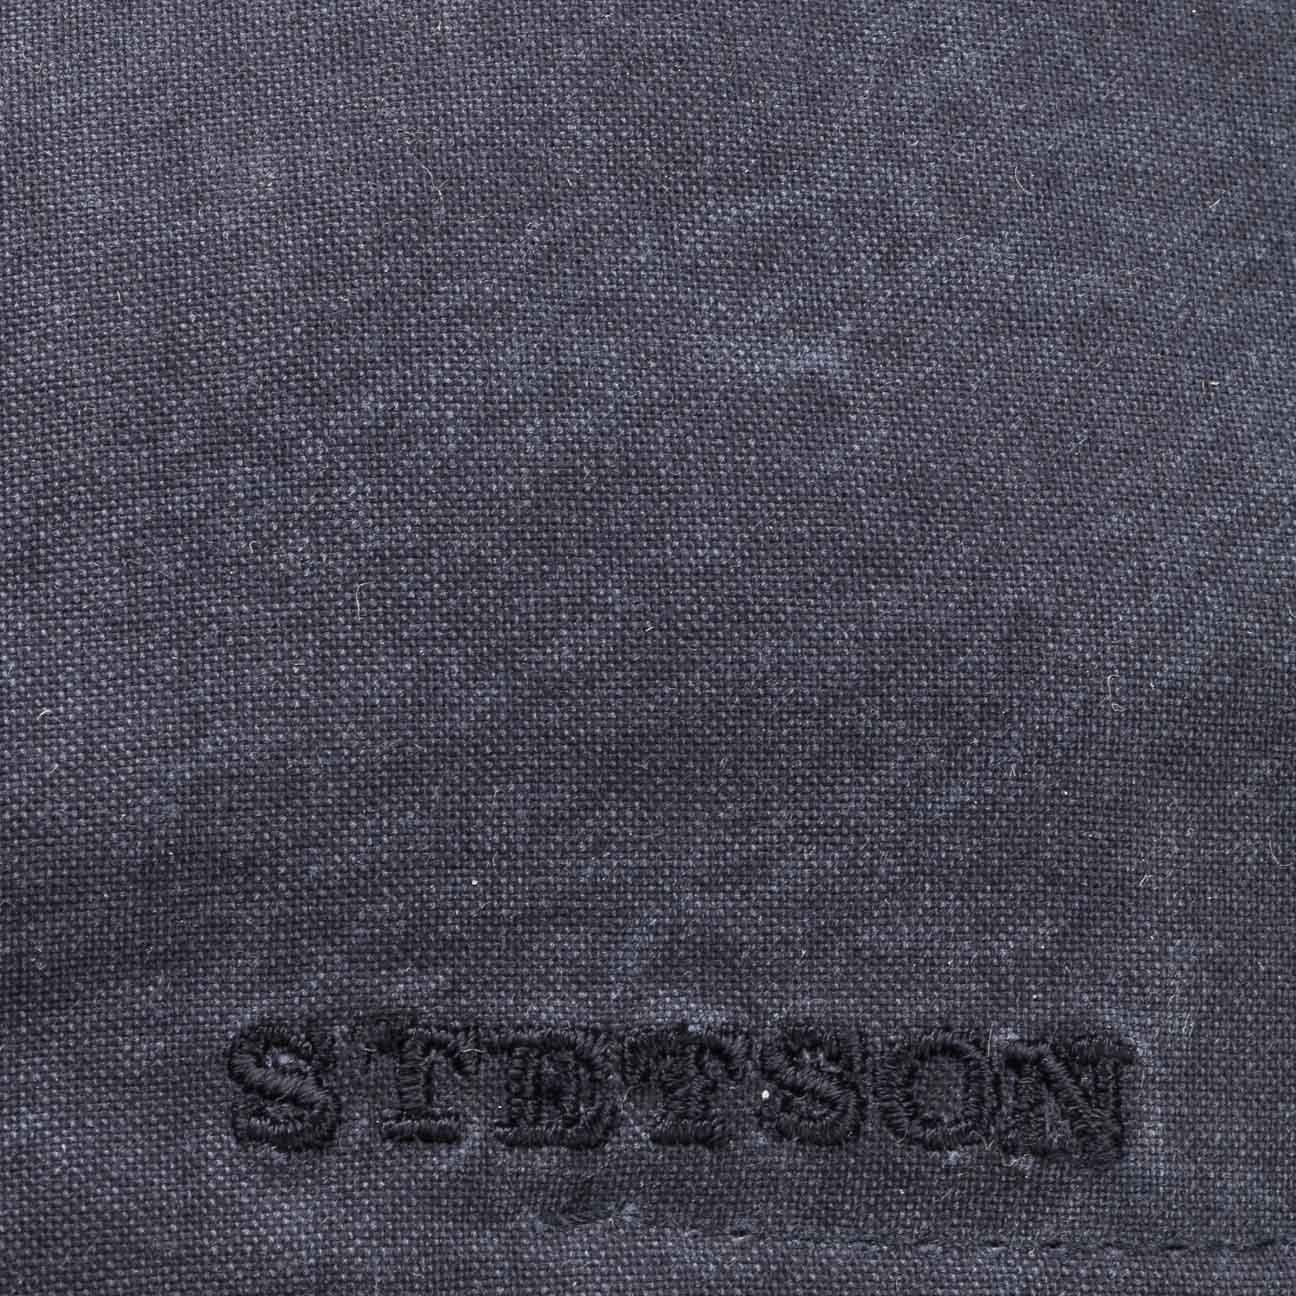 Stetson (1-St) mit blau Schirm Flat Flatcap Cap